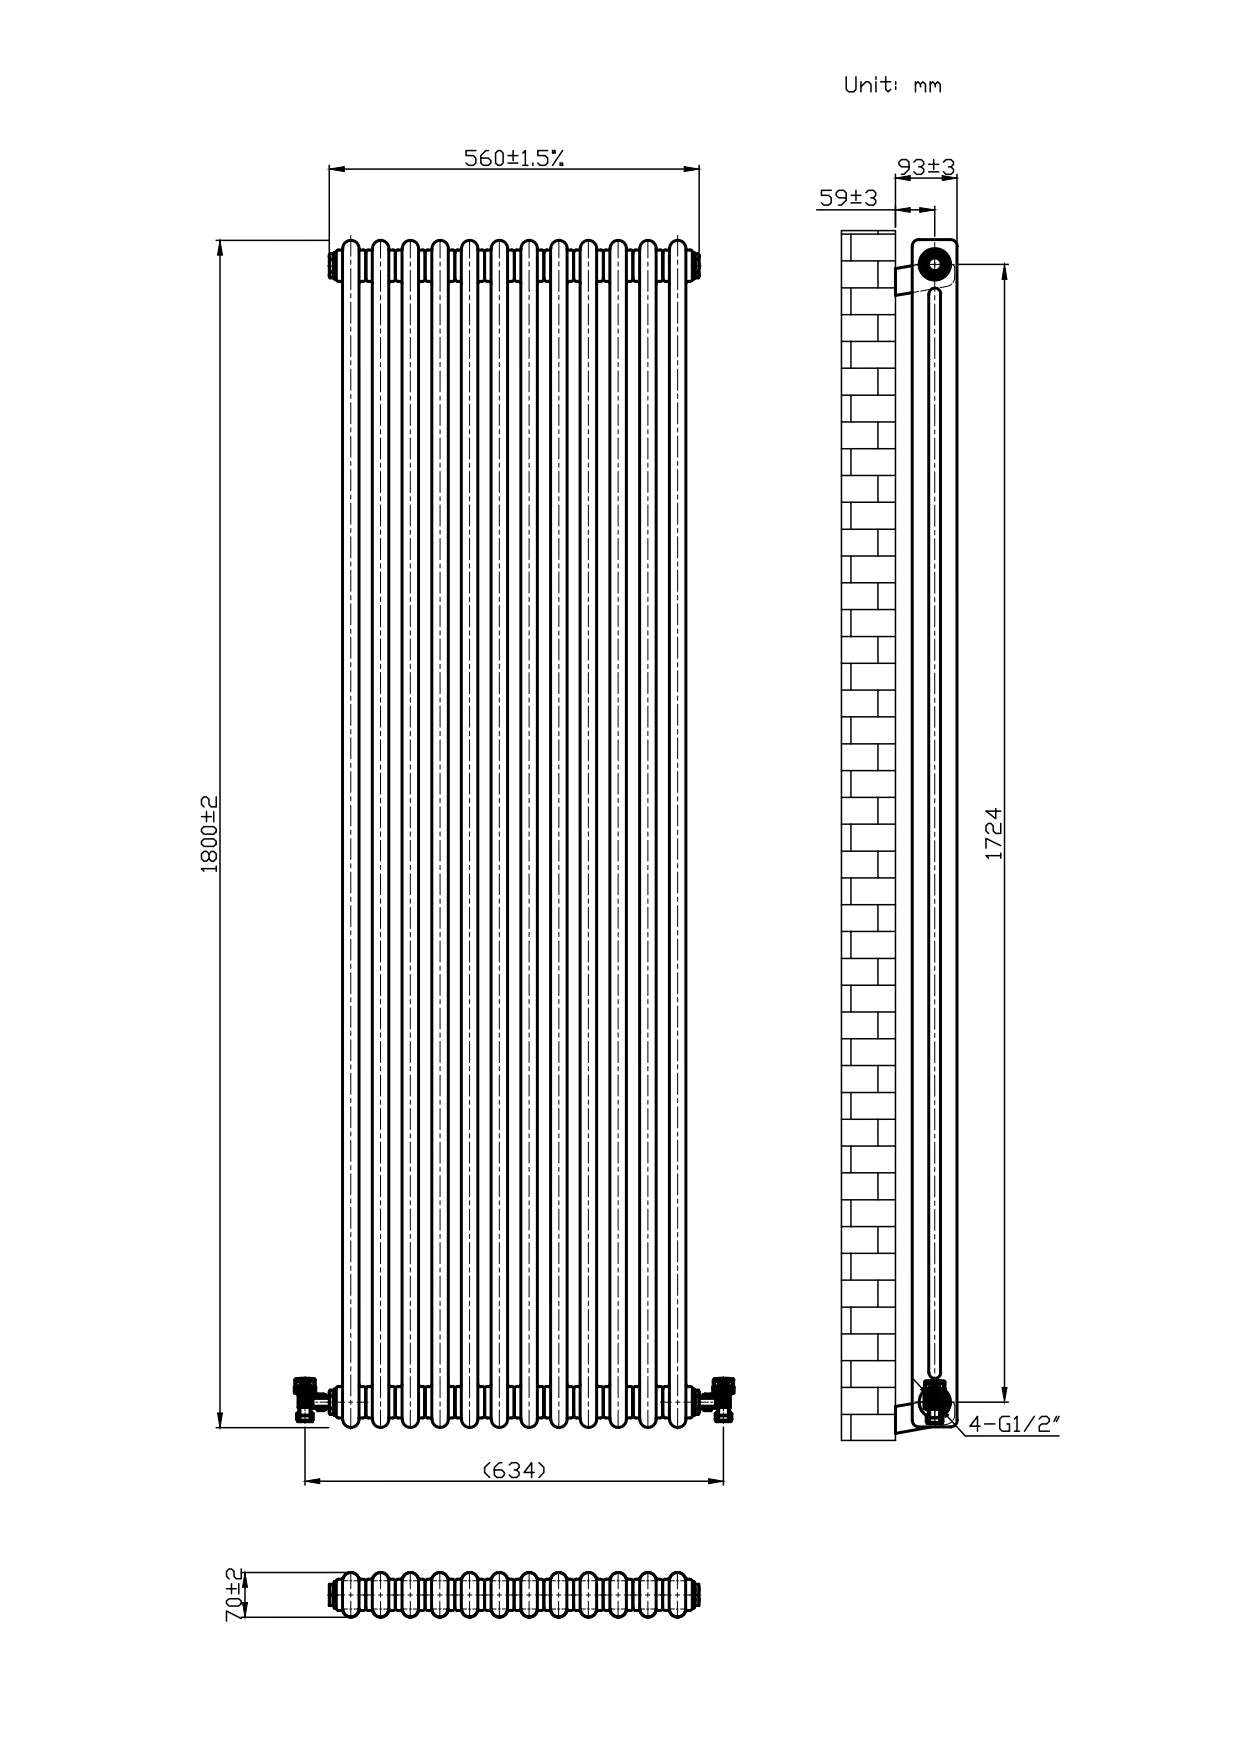 Helena MKII Column Vertical Radiator - Raw Metal